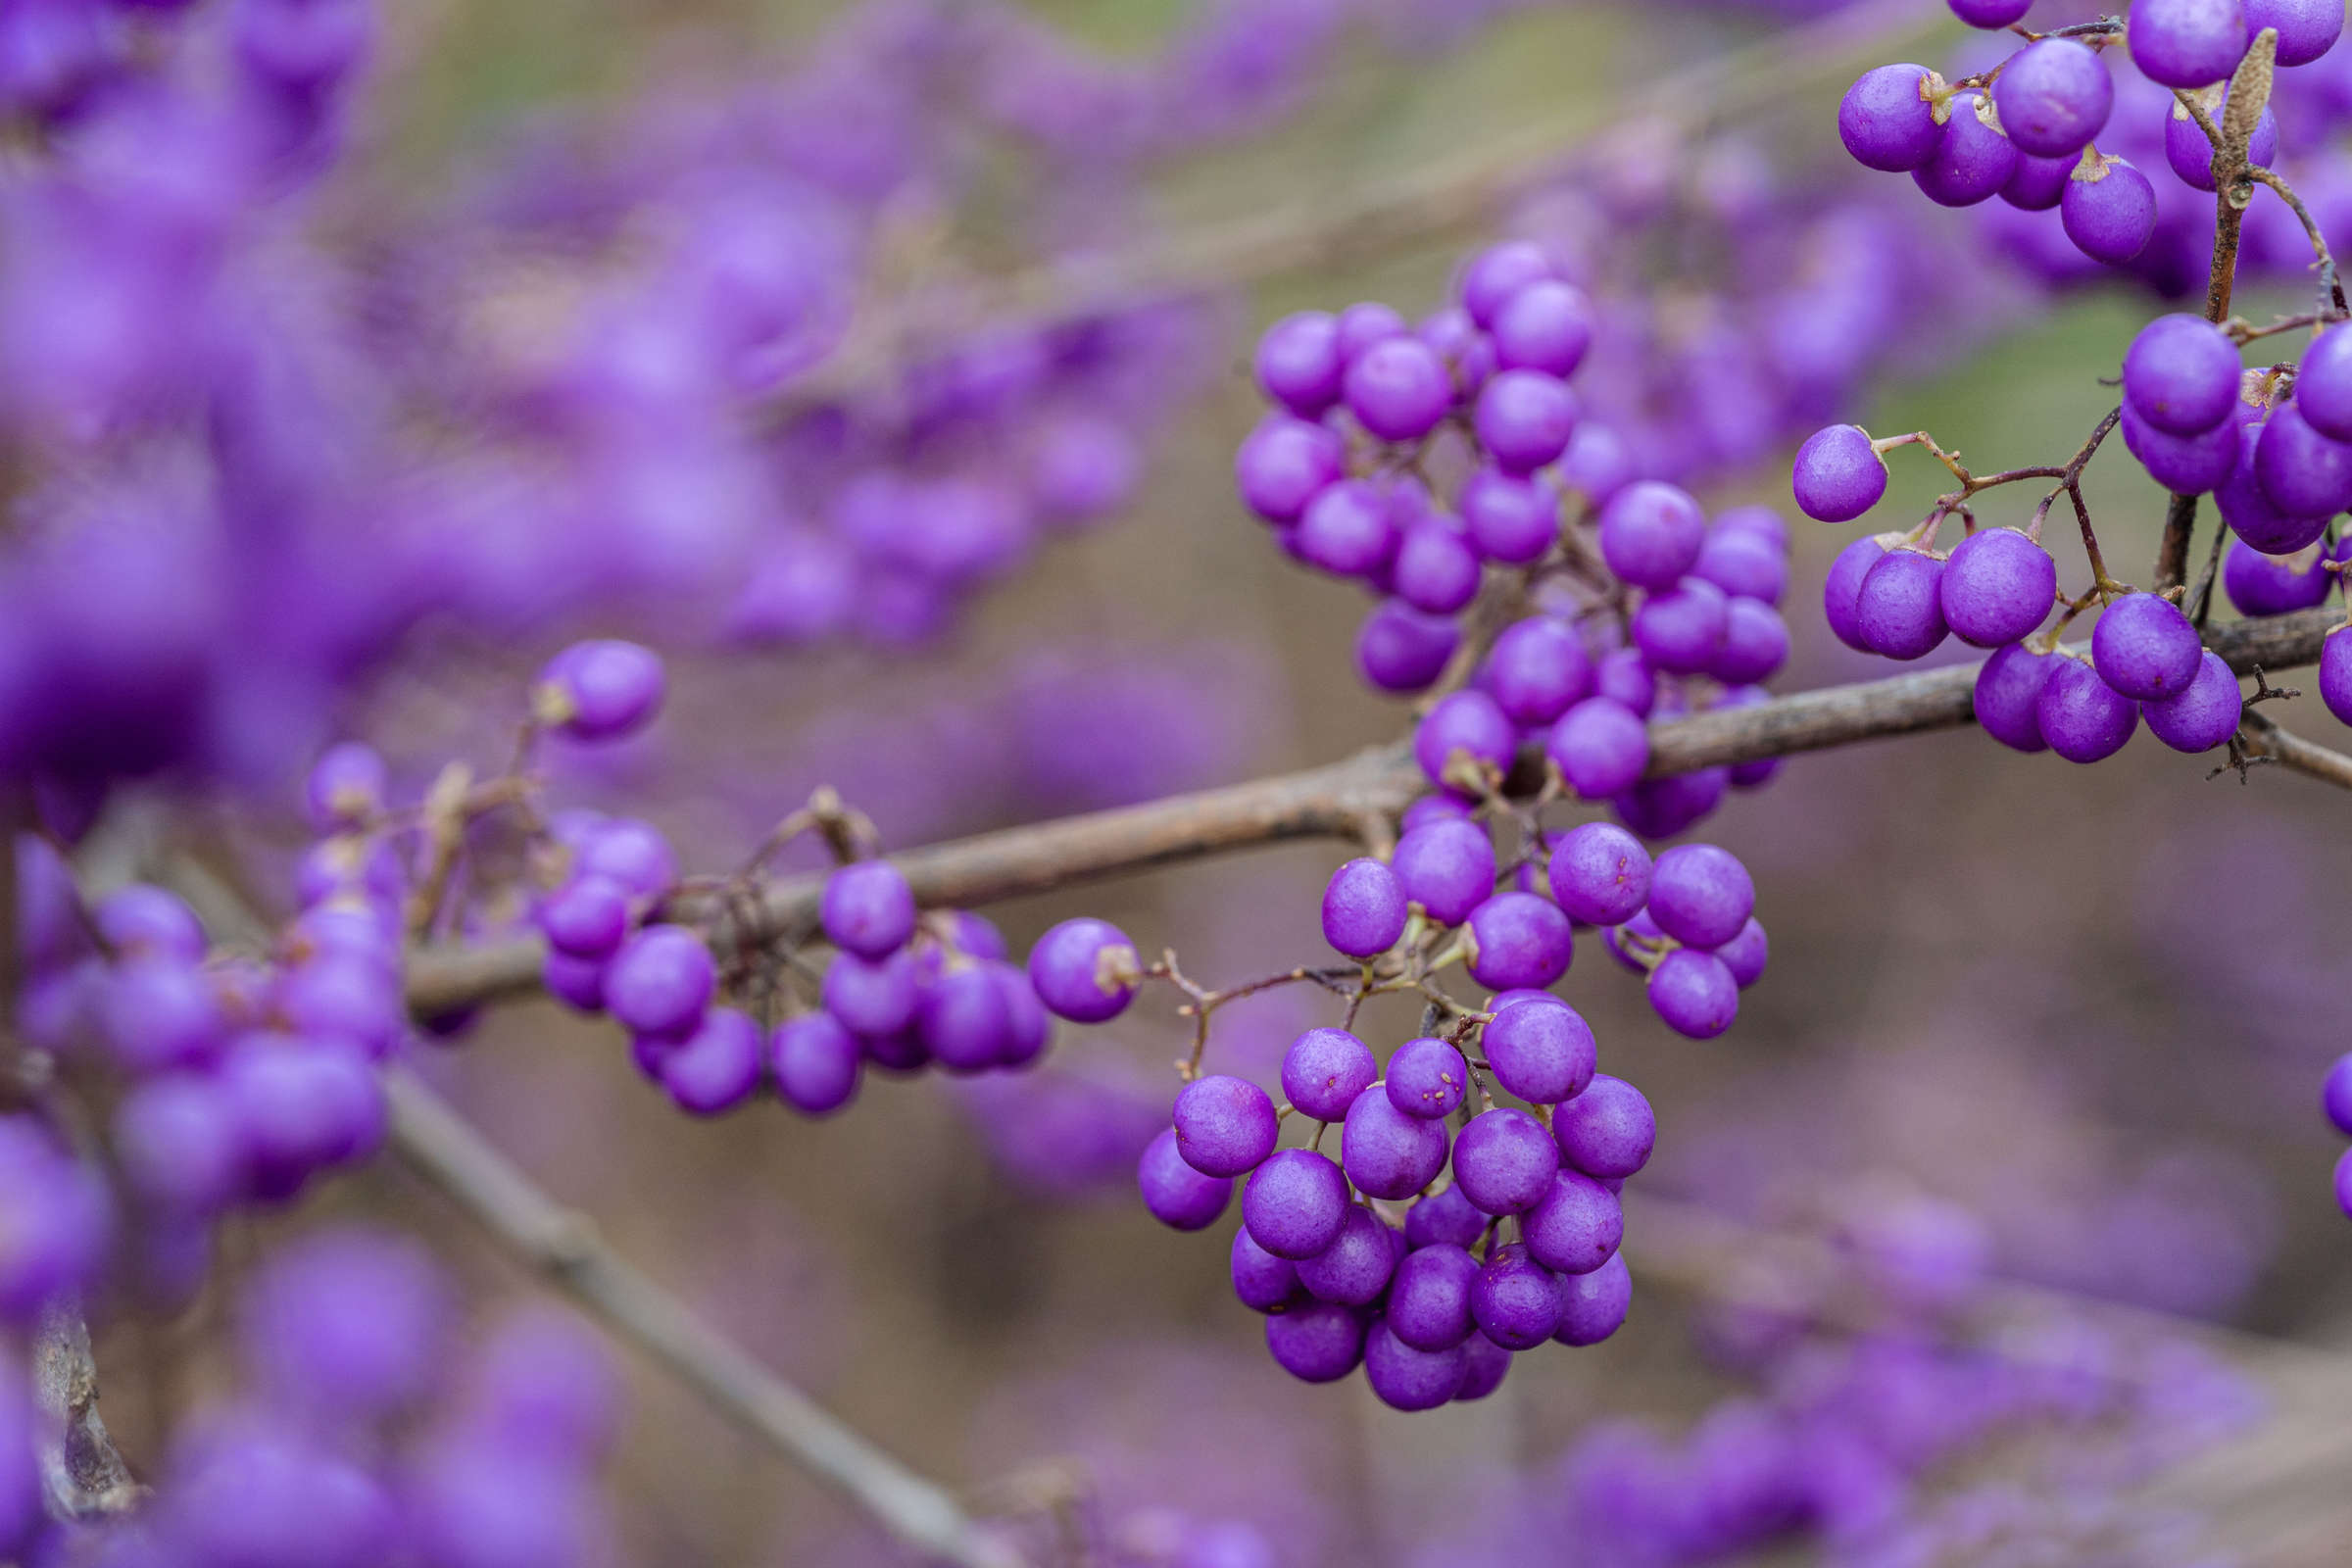 Vibrant purple berries cover a dark, otherwise barren plant stem